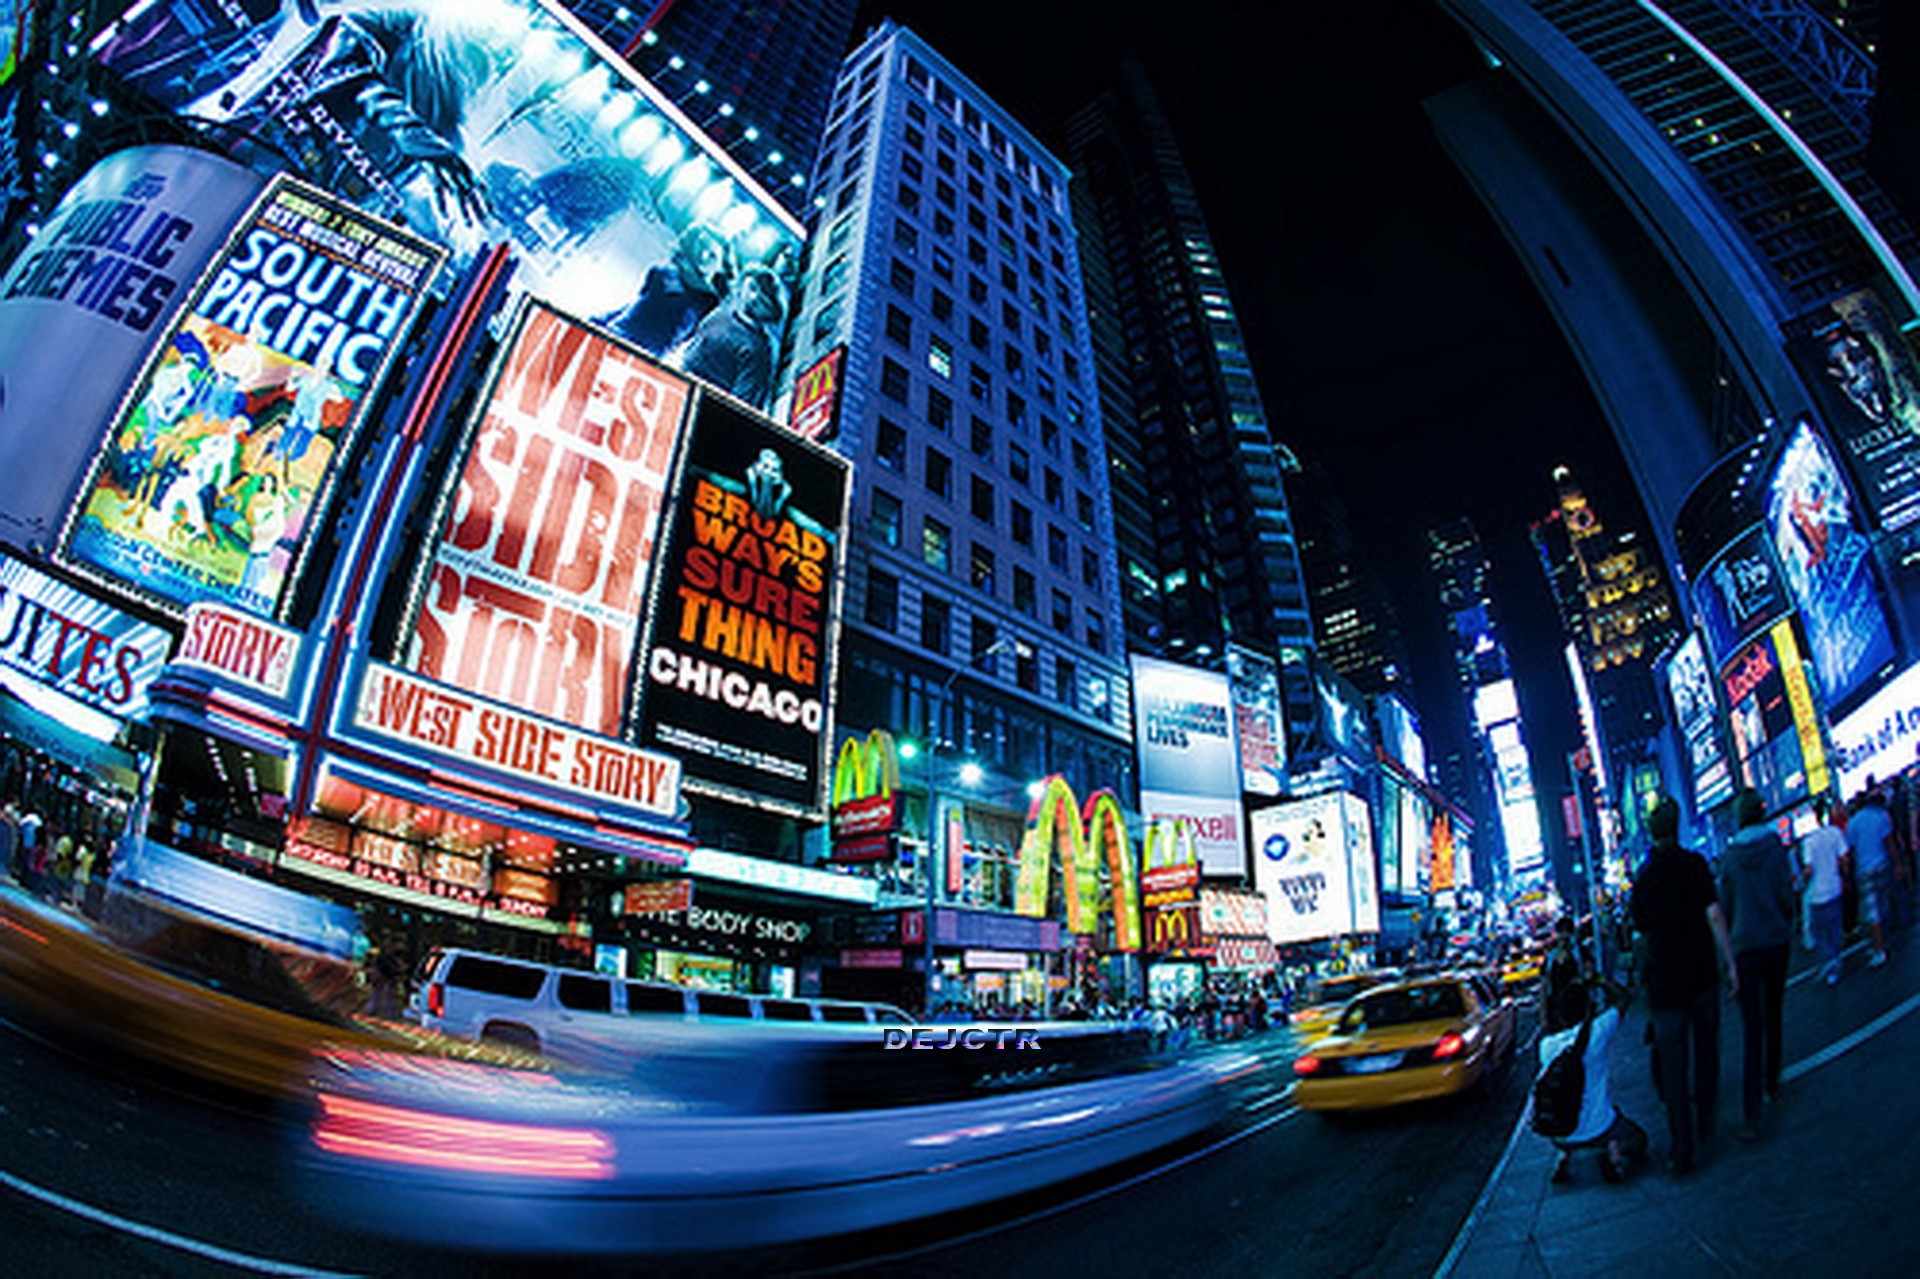 Dejctr City Night West Side Story Wallpaper For Desktop - Times Square , HD Wallpaper & Backgrounds